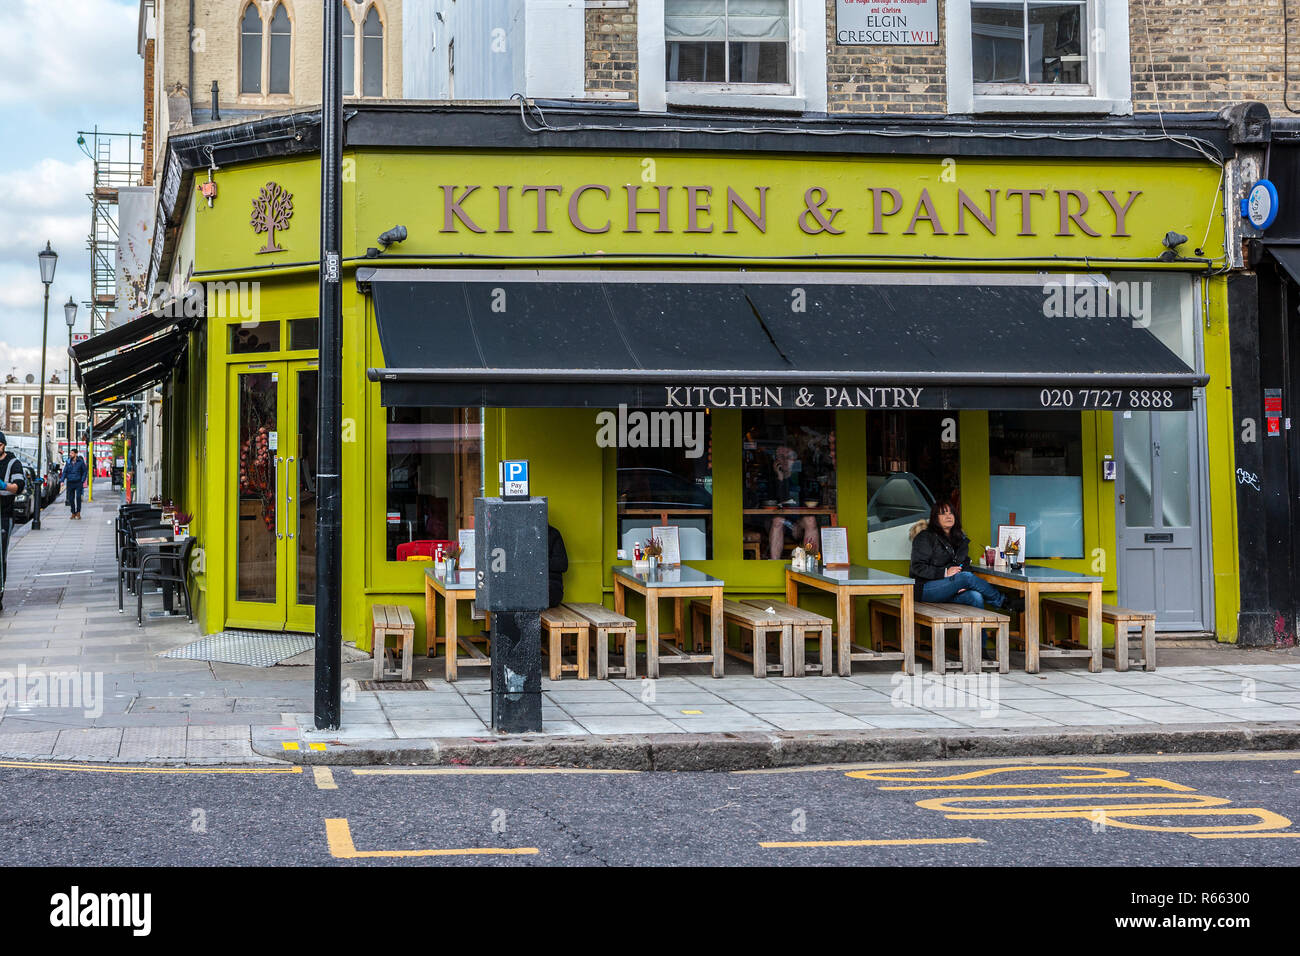 Kitchen & Pantry Cafe, Elgin Crescent, Notting Hill, London Stock Photo